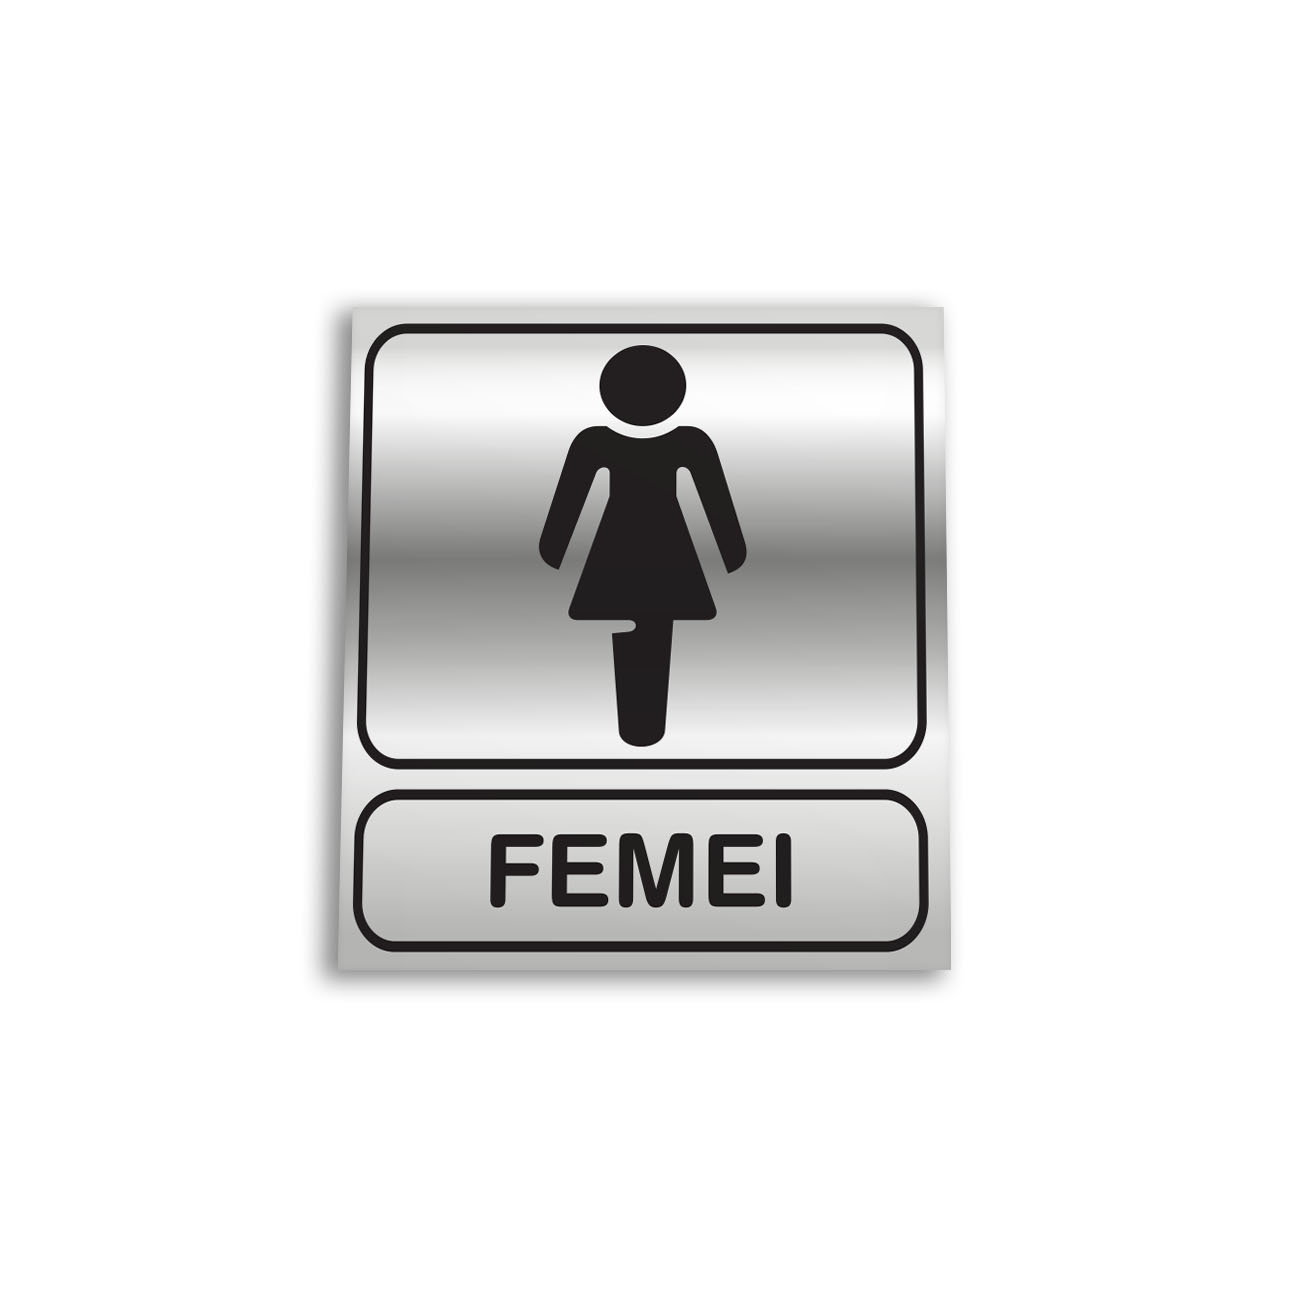 plenty transmission please confirm www.semne-indicatoare.ro - Produs: panou aluminiu toaleta femei <span  class="product-display-code">(AL0108)</span>